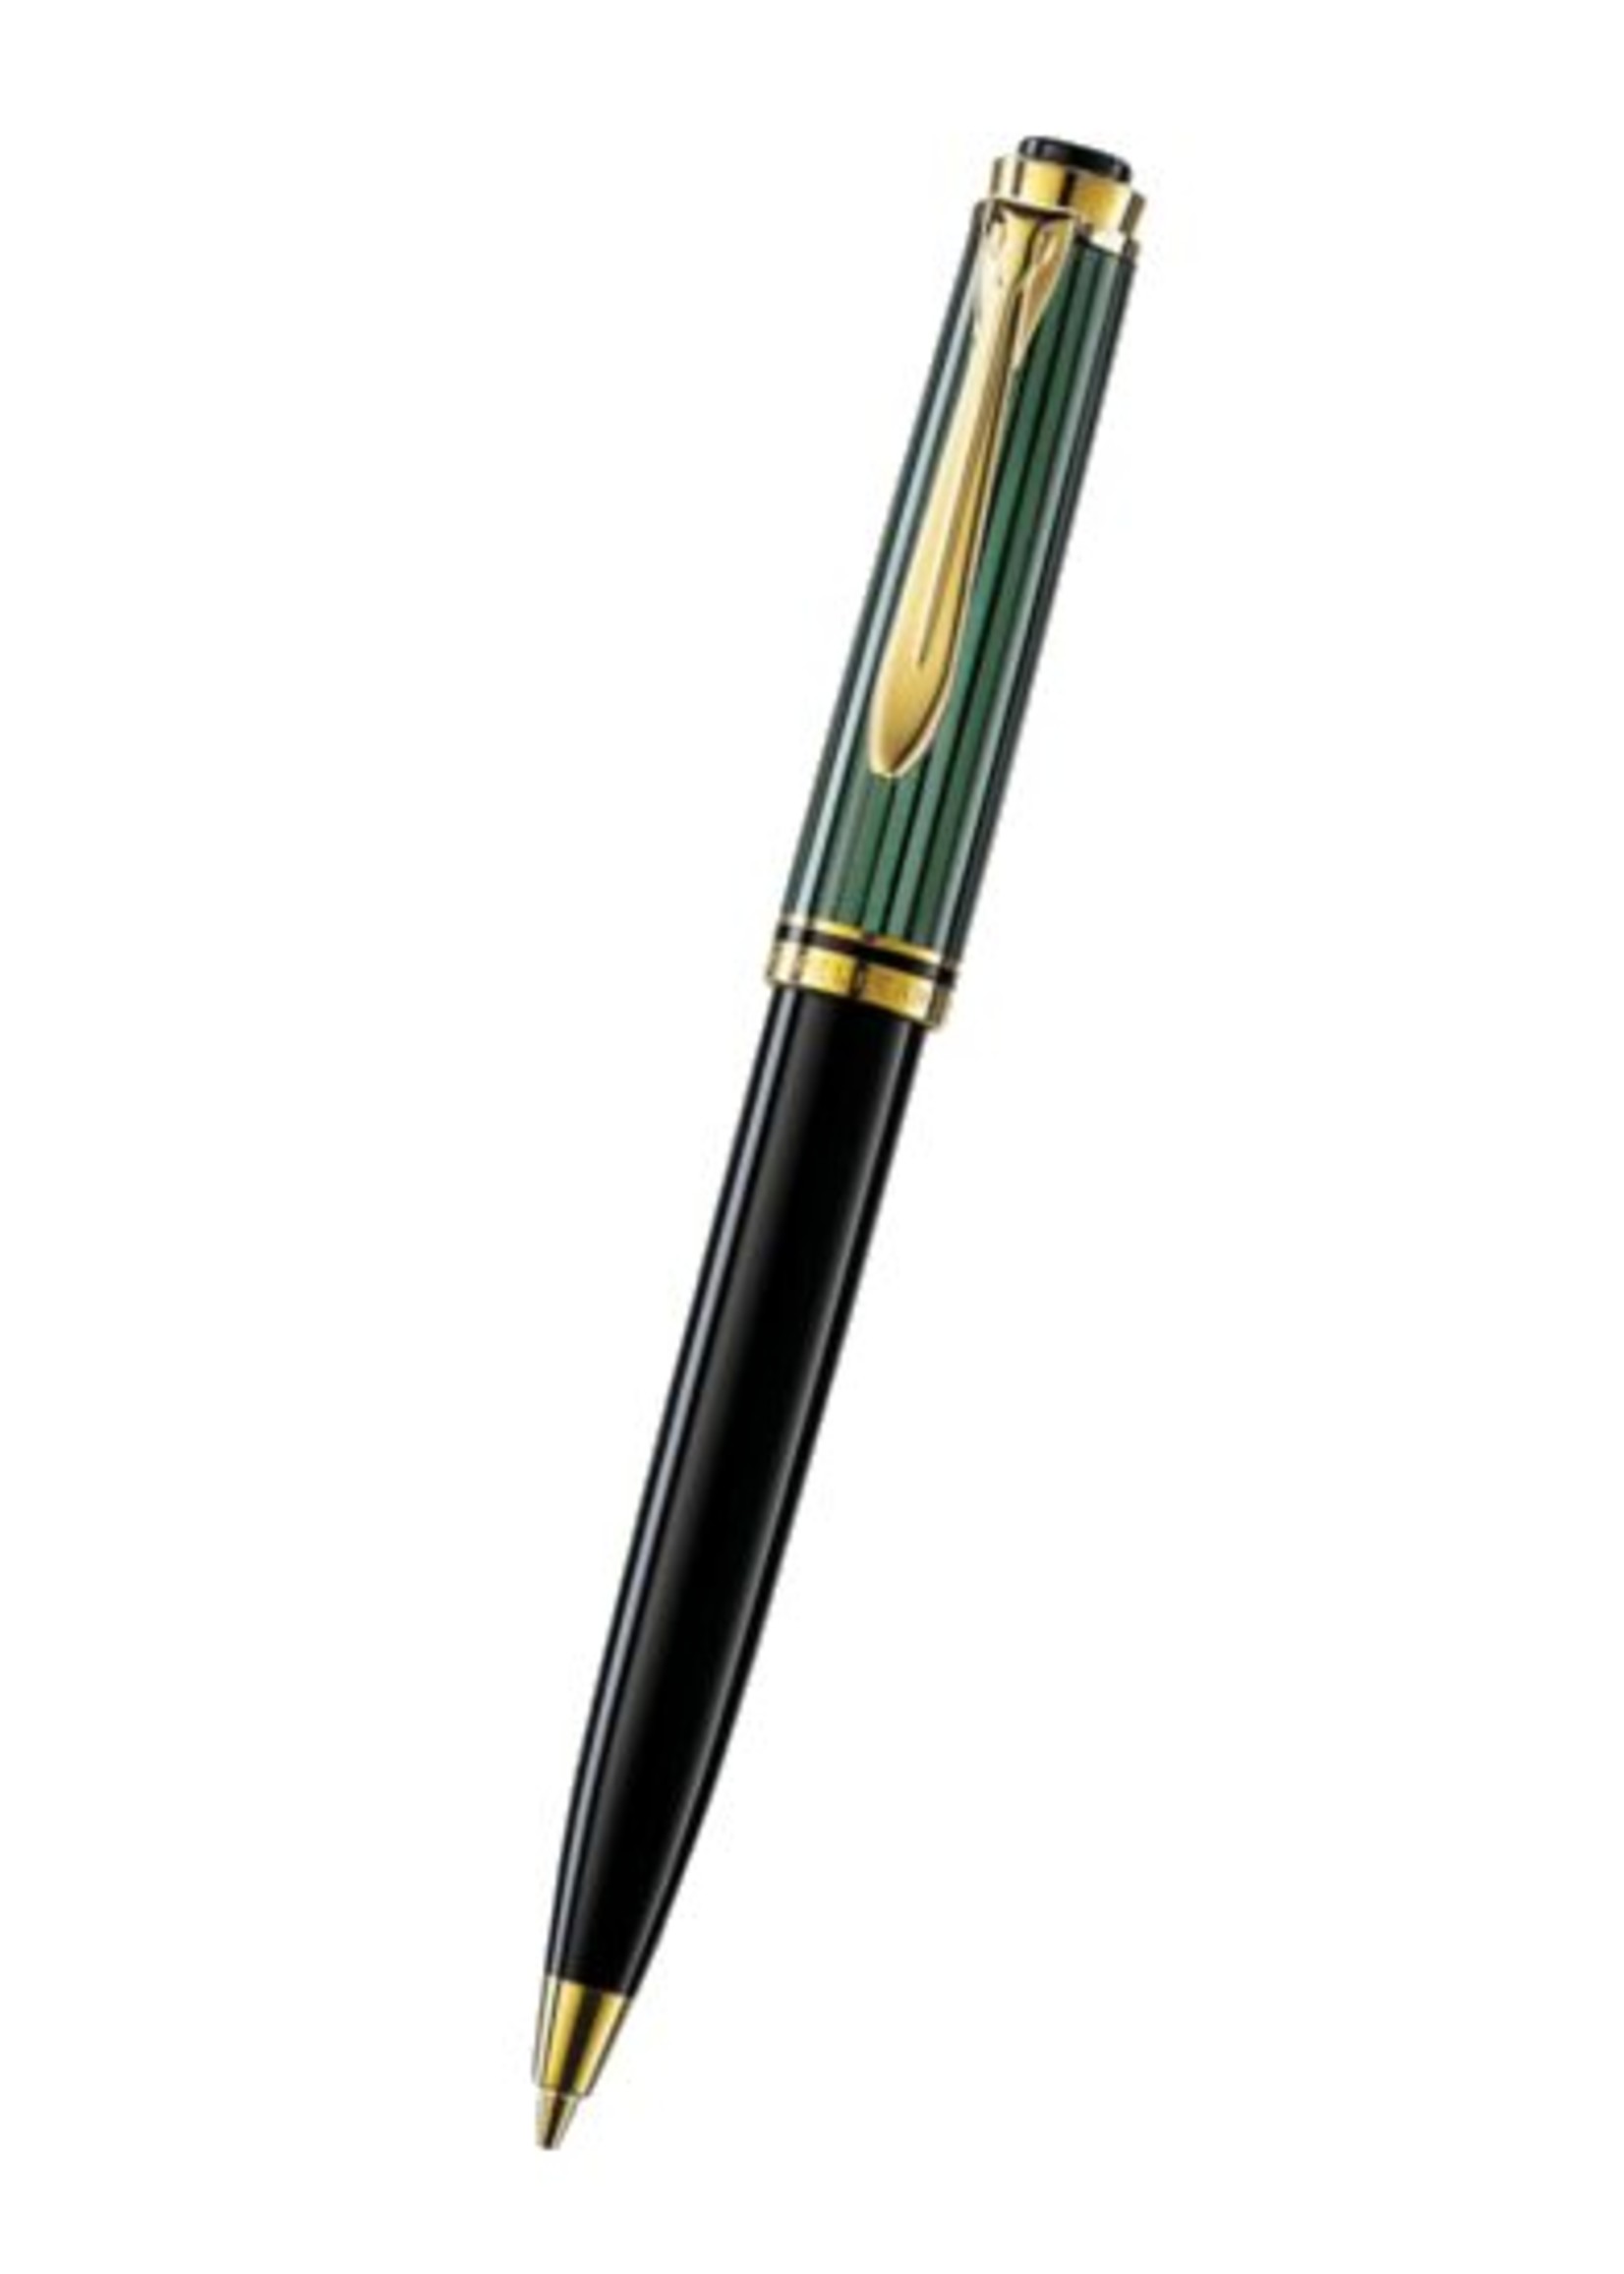 Pelikan Pelikan DS 300 schw/grün klein